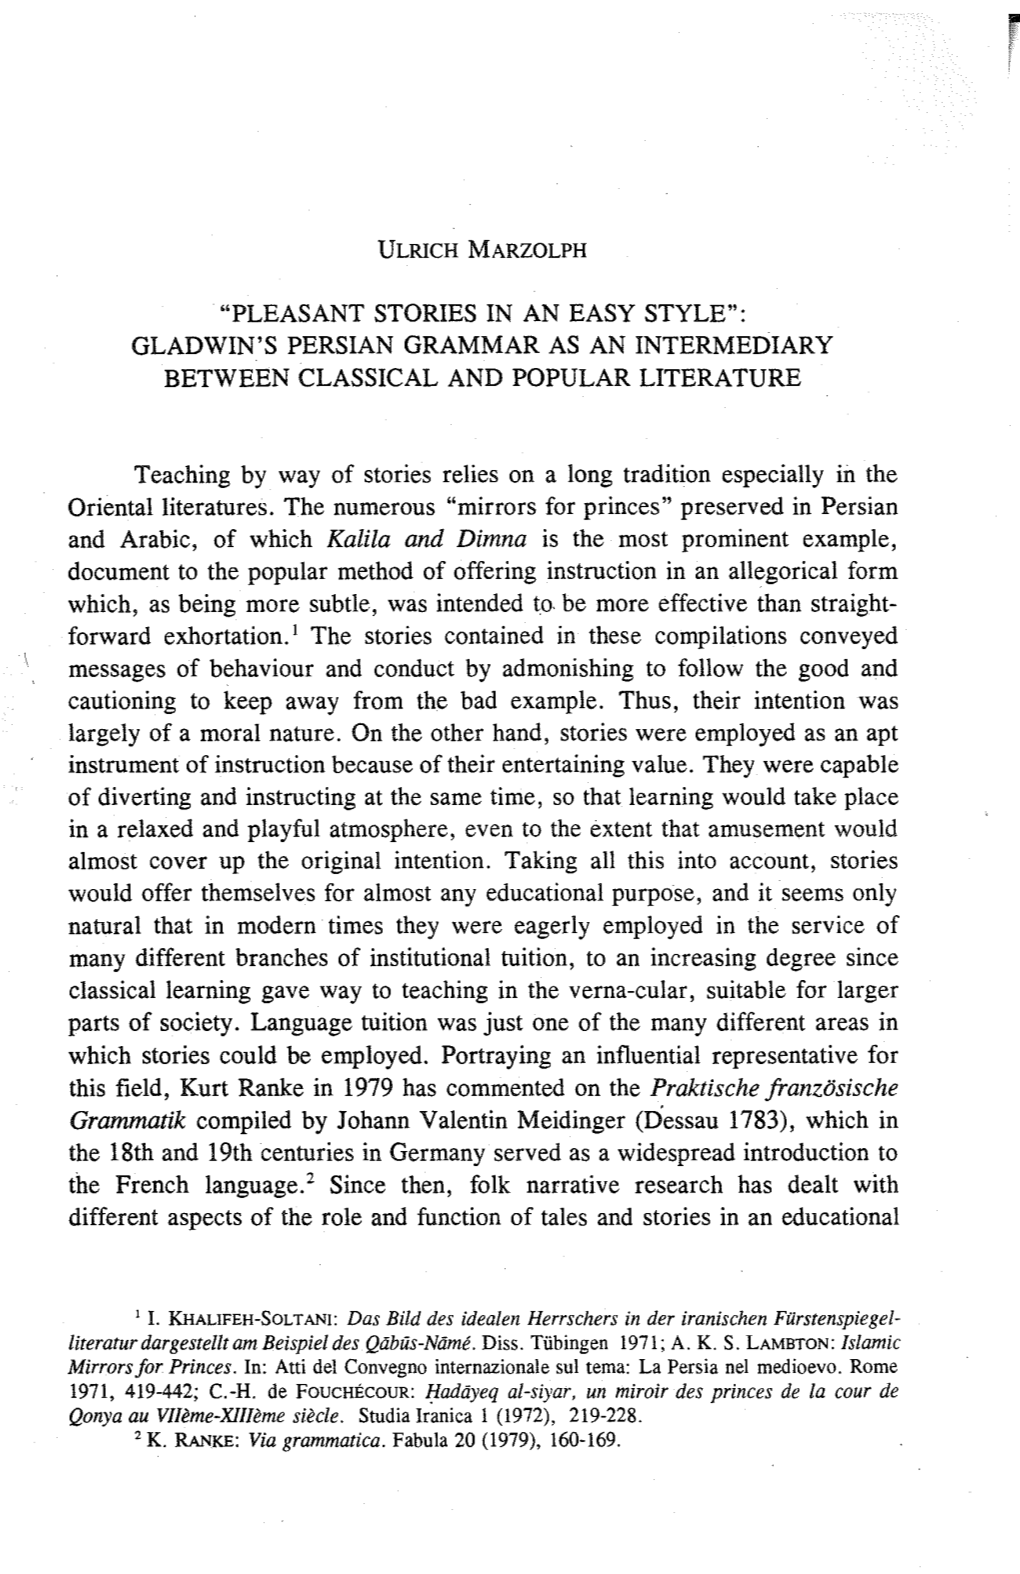 Gladwin's Persian Grammar As an Intermediary Between Classical and Popular Literature